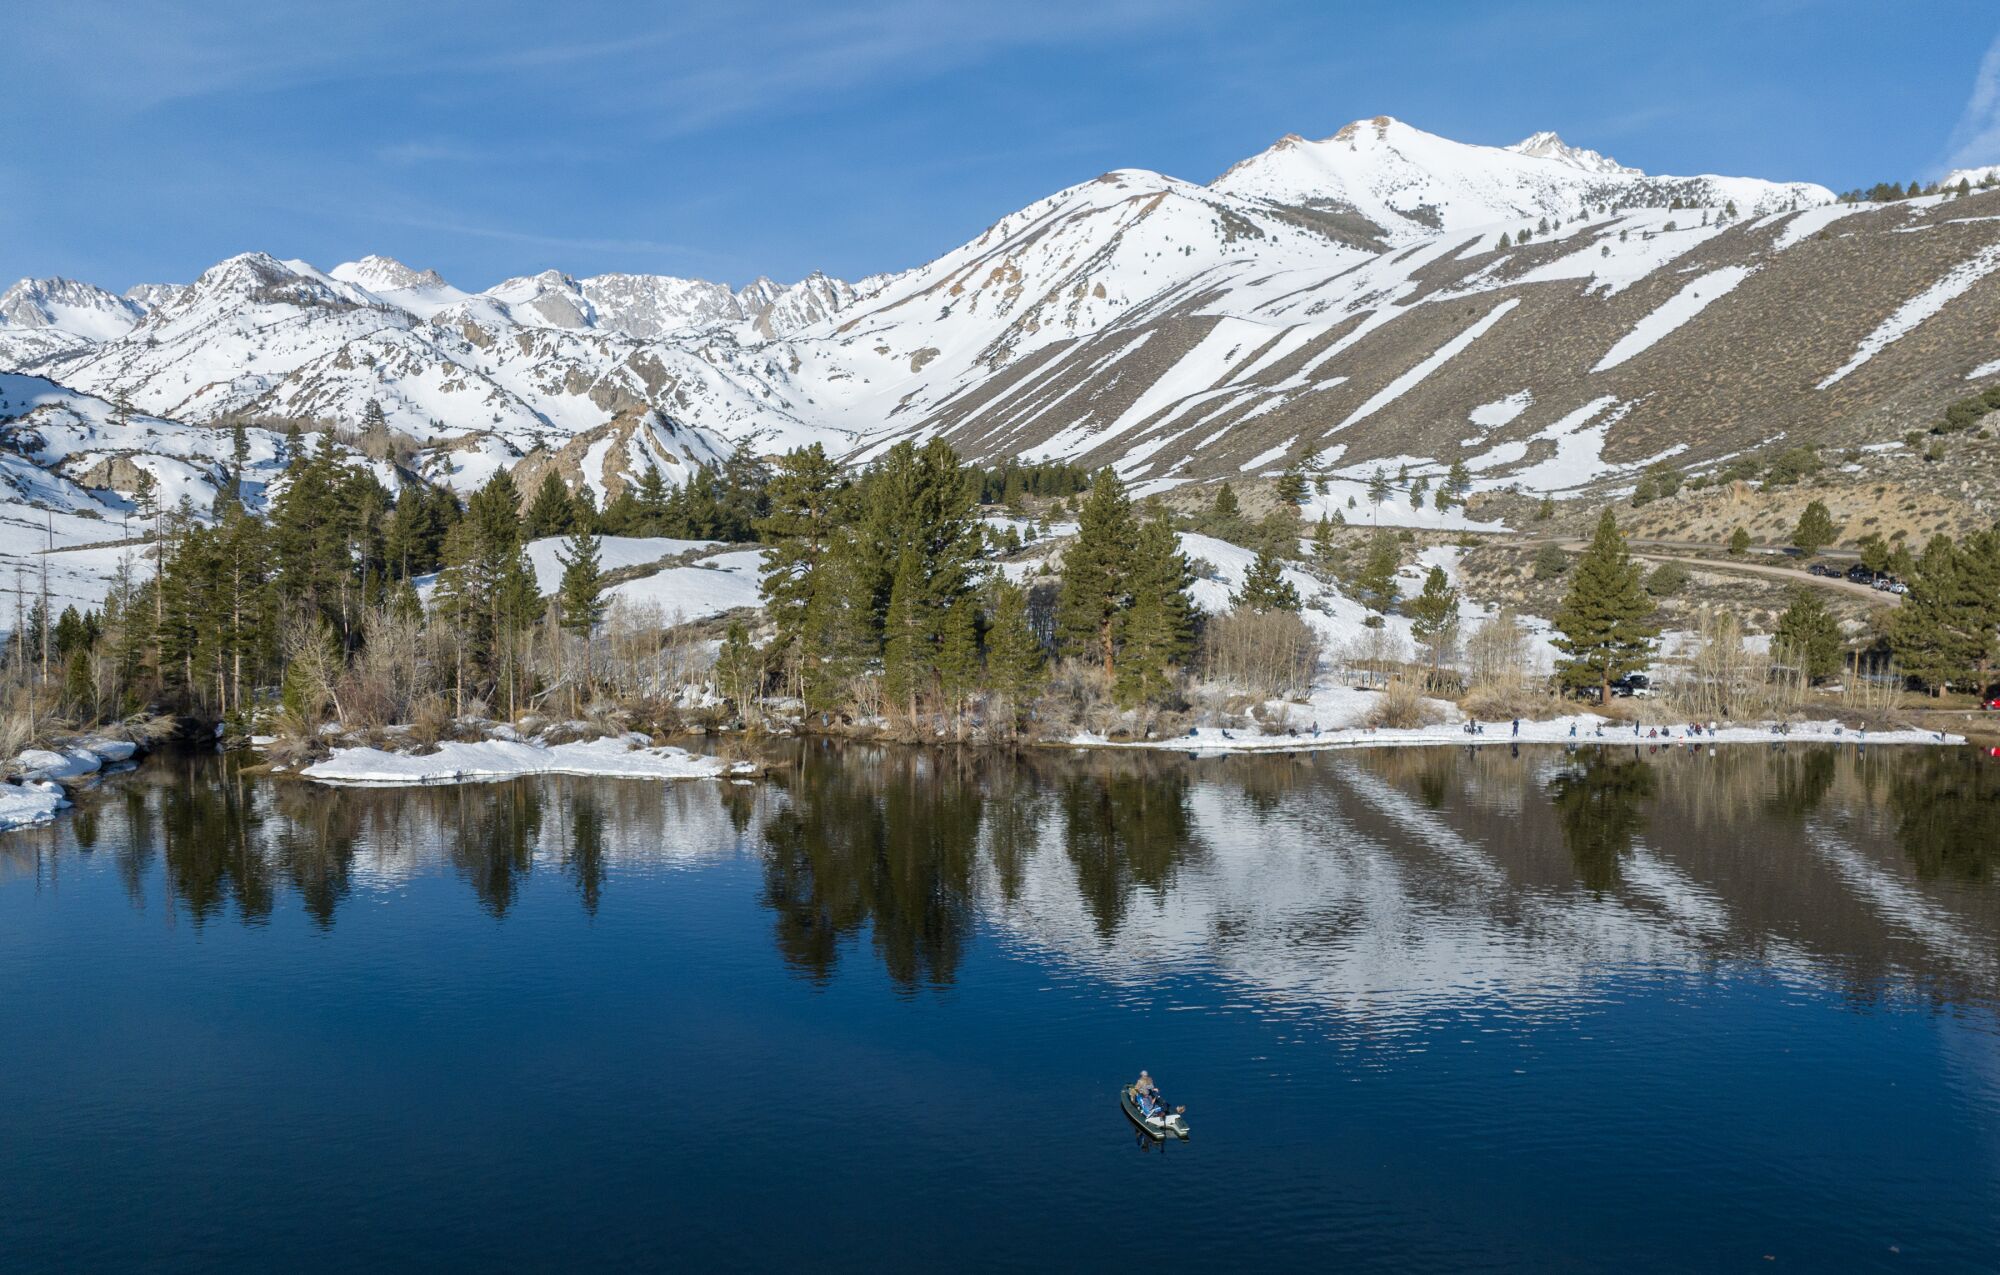 Snowy Sierra Nevada mountains reflected in water.